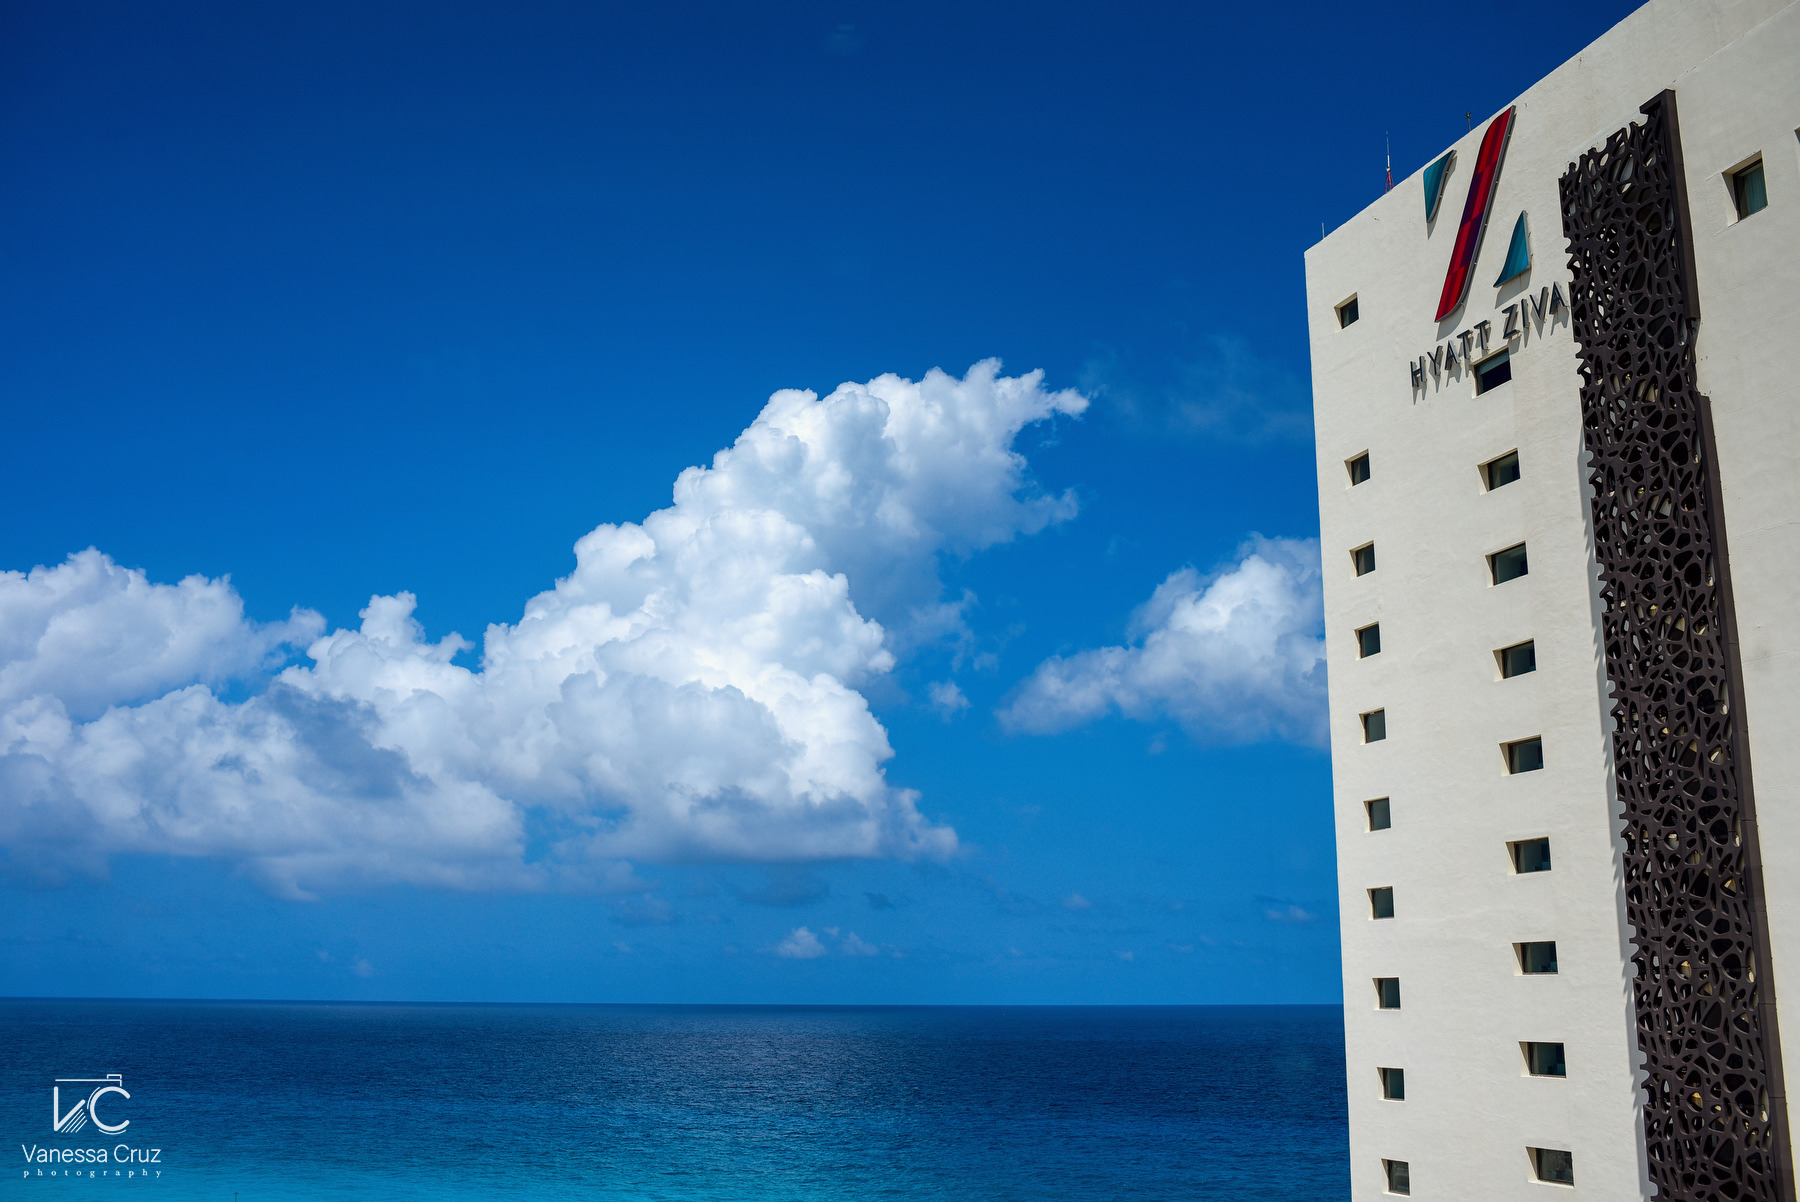 Hyatt Ziva Hotel ocean view Cancun Mexico 